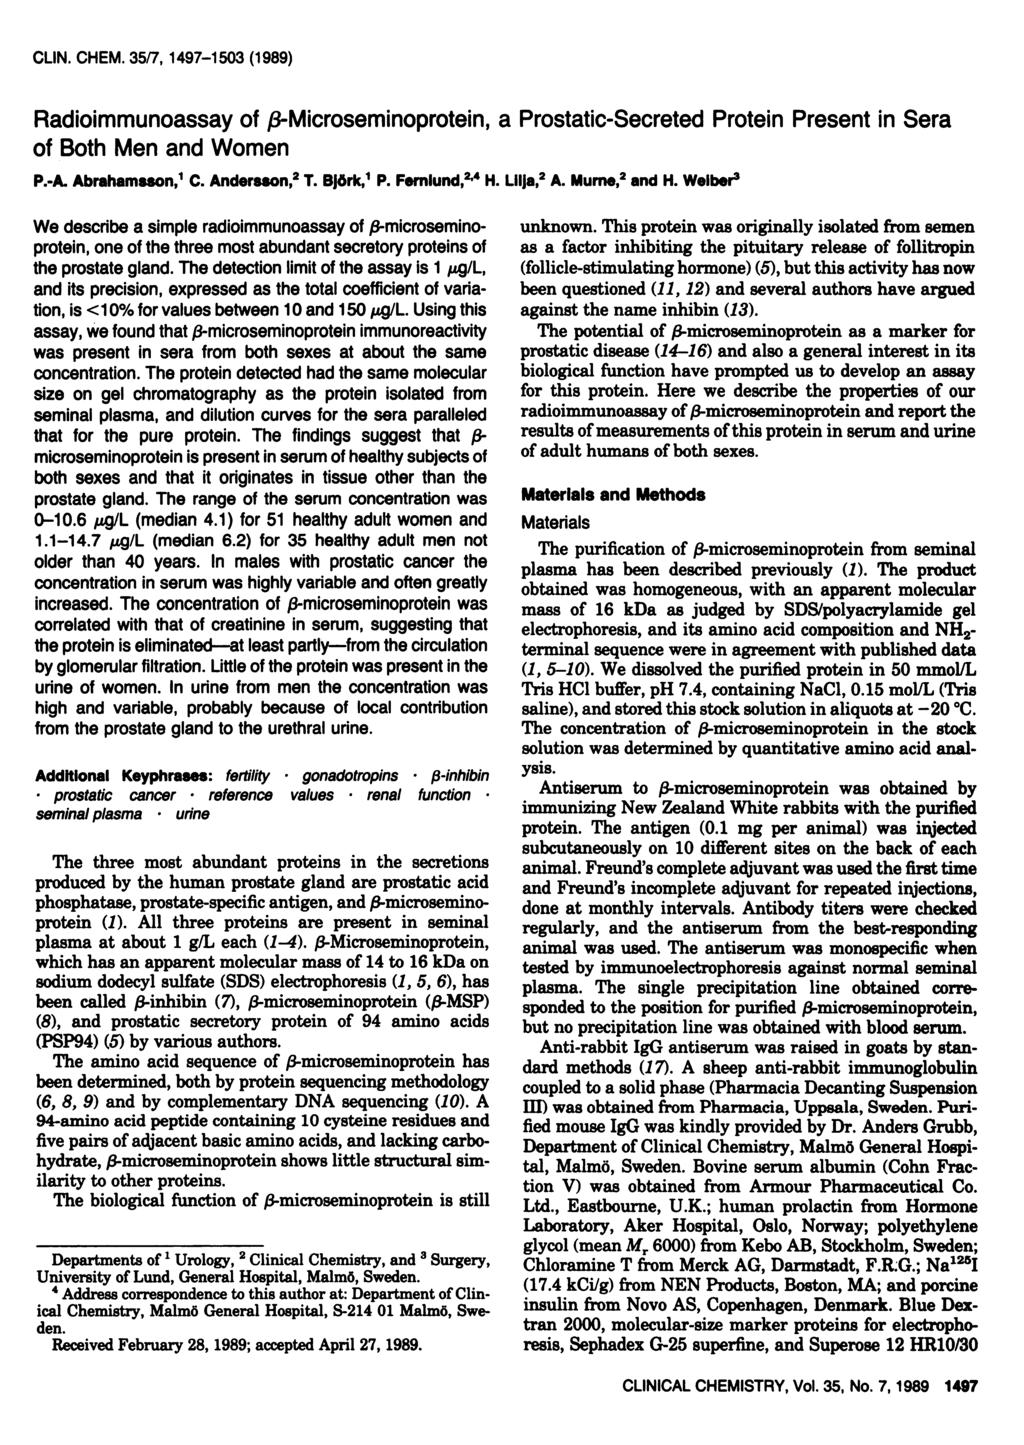 LIN. HM. 35/7, 1497-1 53 (1989) Rdioimmunossy of f3-microseminoprotein, Prosttic-Secreted Protein Present in Ser of Both Men nd Women P.-A. Abrhmsson,1. Andersson,2 1. BjOrk, P. Fernlund,2 4H.